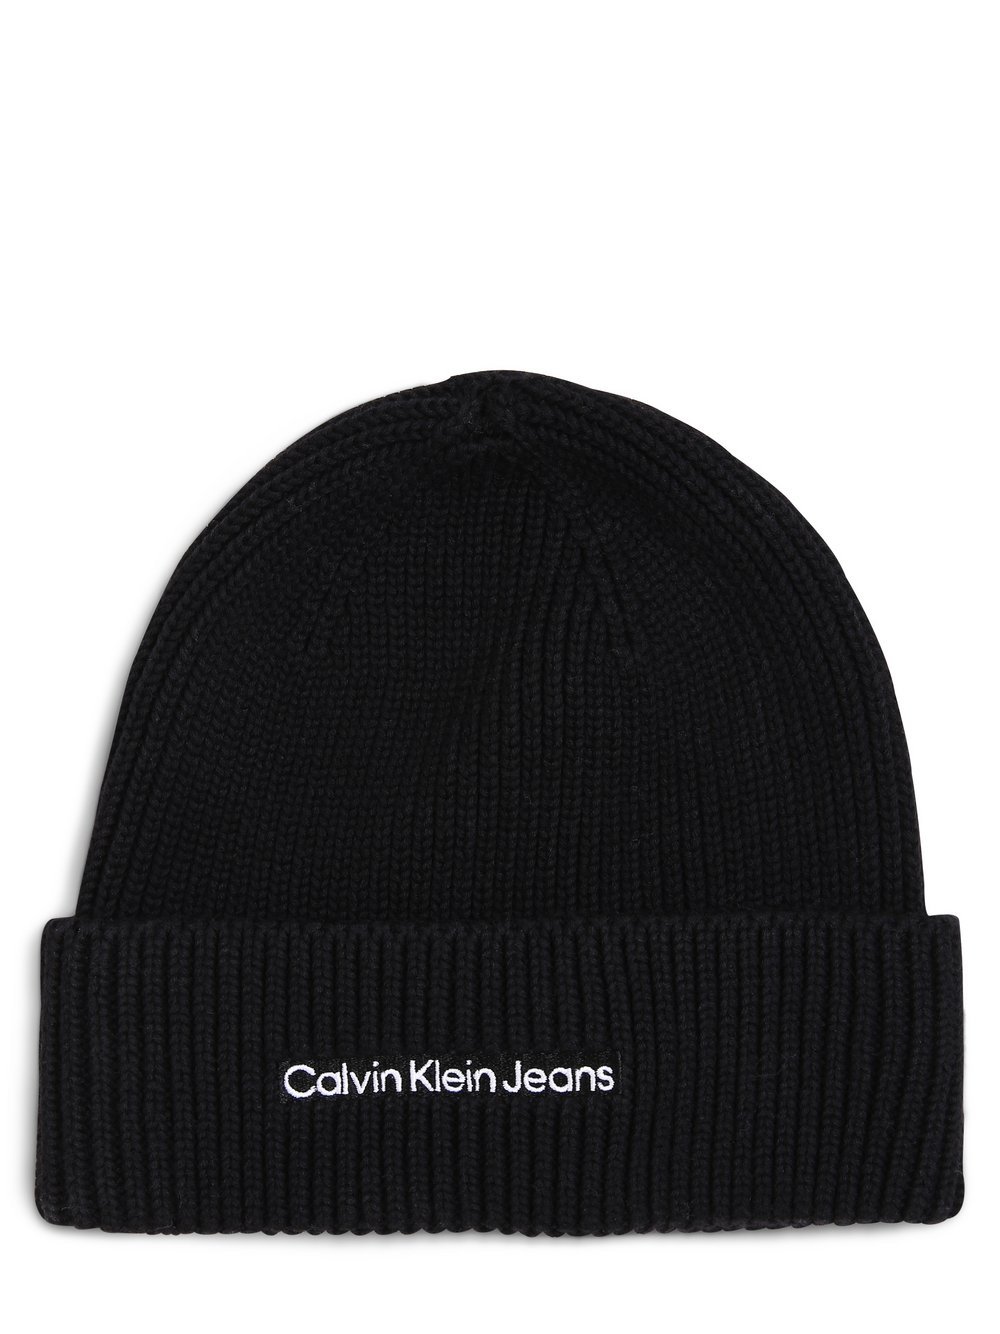 Calvin Klein Jeans - Czapka damska, czarny